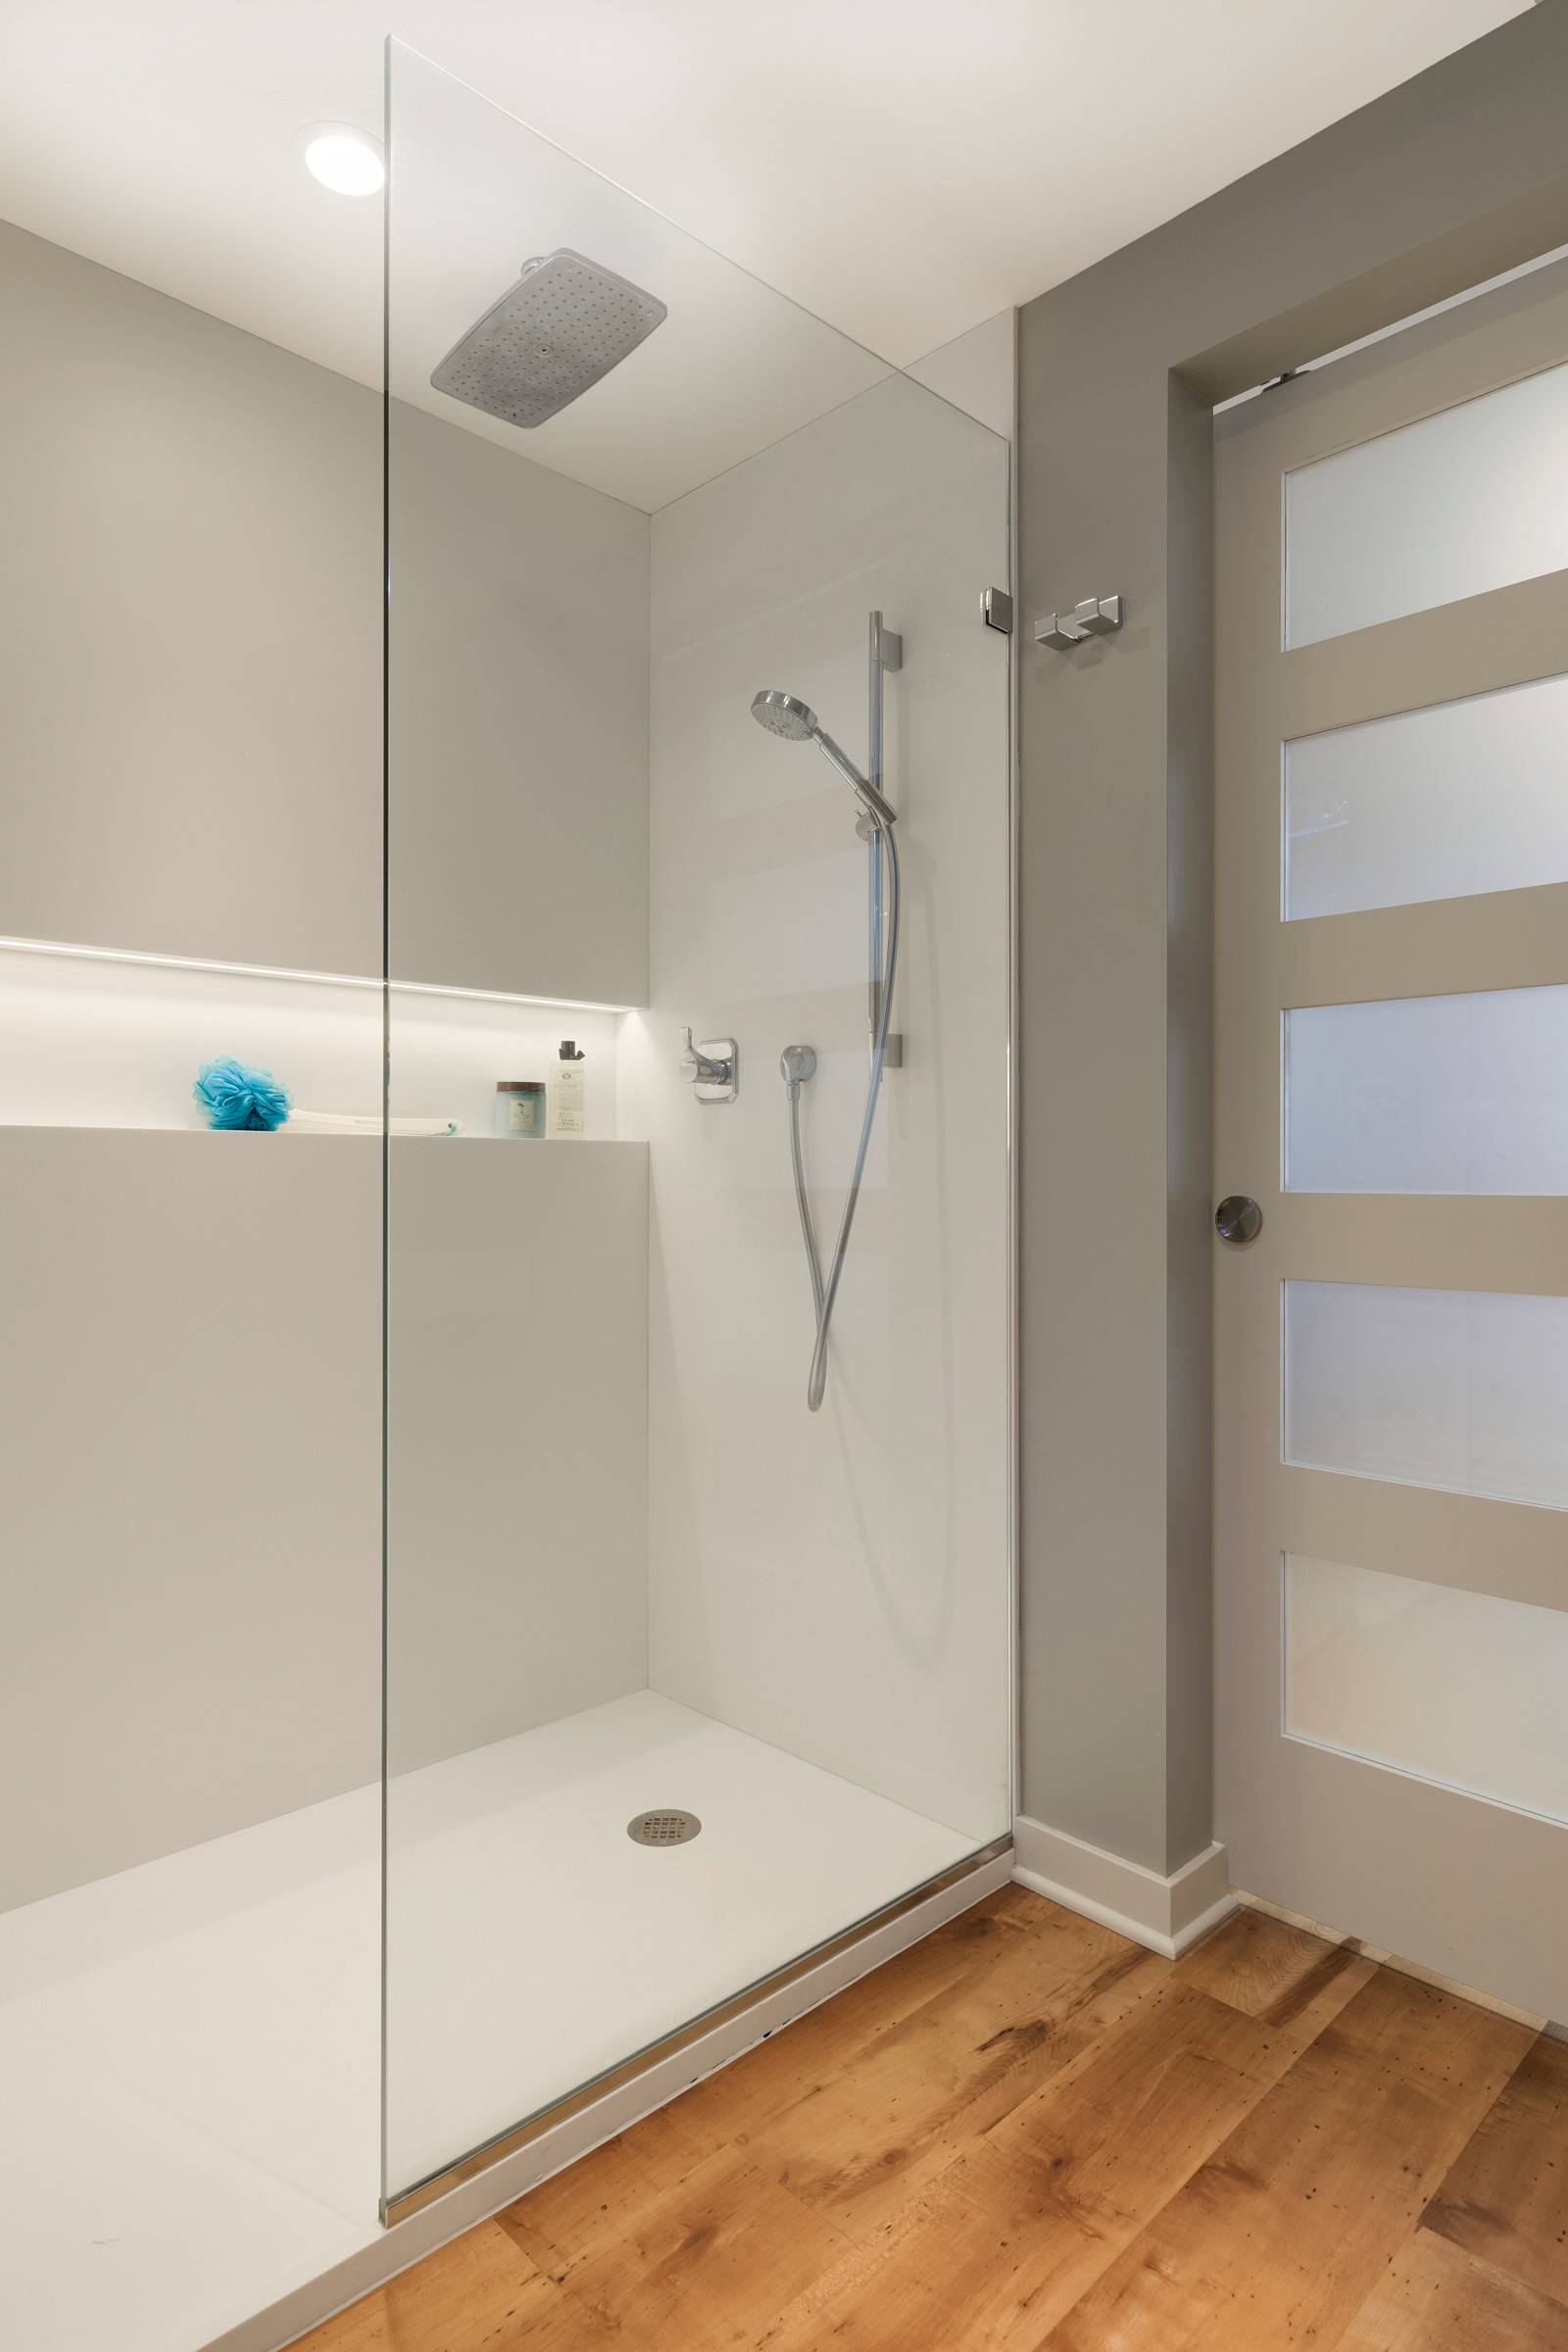 75 Vinyl Floor Bathroom Ideas You Ll, Can You Use Waterproof Flooring For Shower Walls